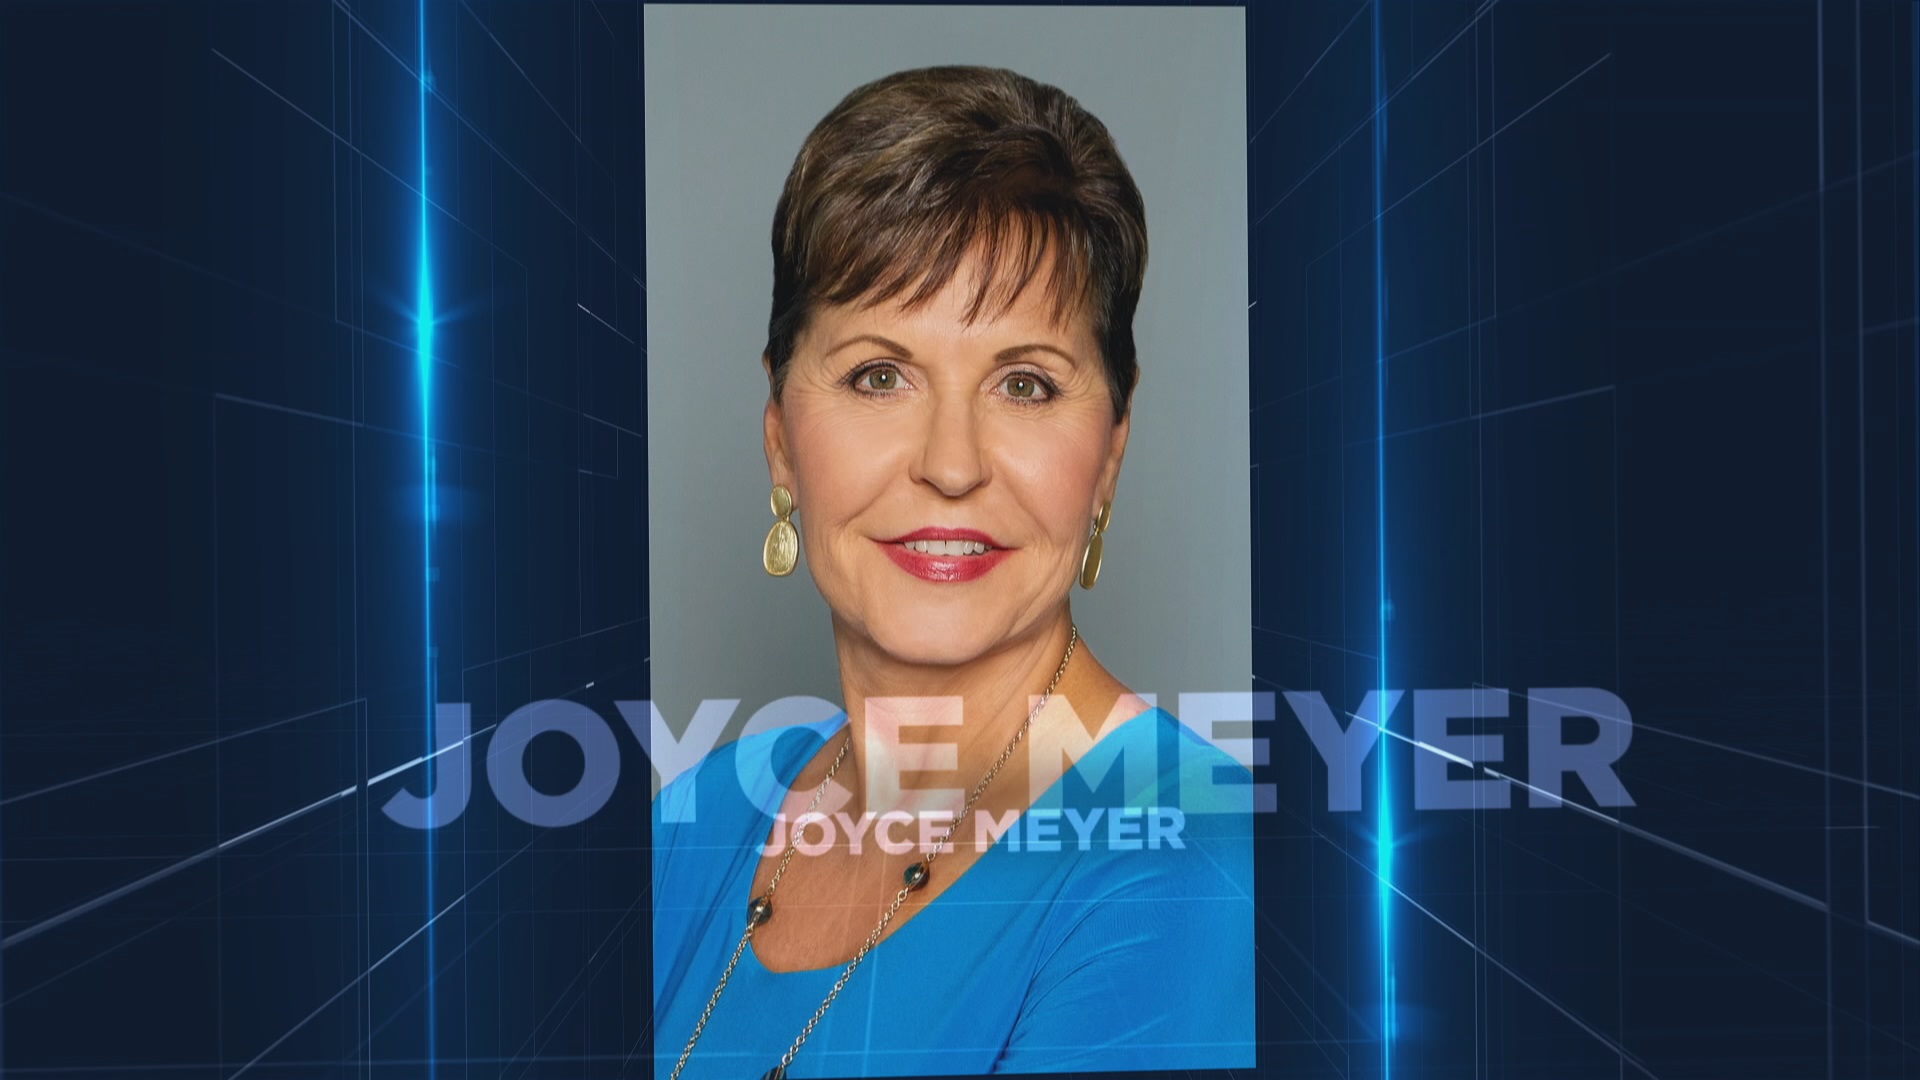 Joyce Meyer 2022 Schedule Praise - Joyce Meyer - January 25, 2022 | Trinity Broadcasting Network